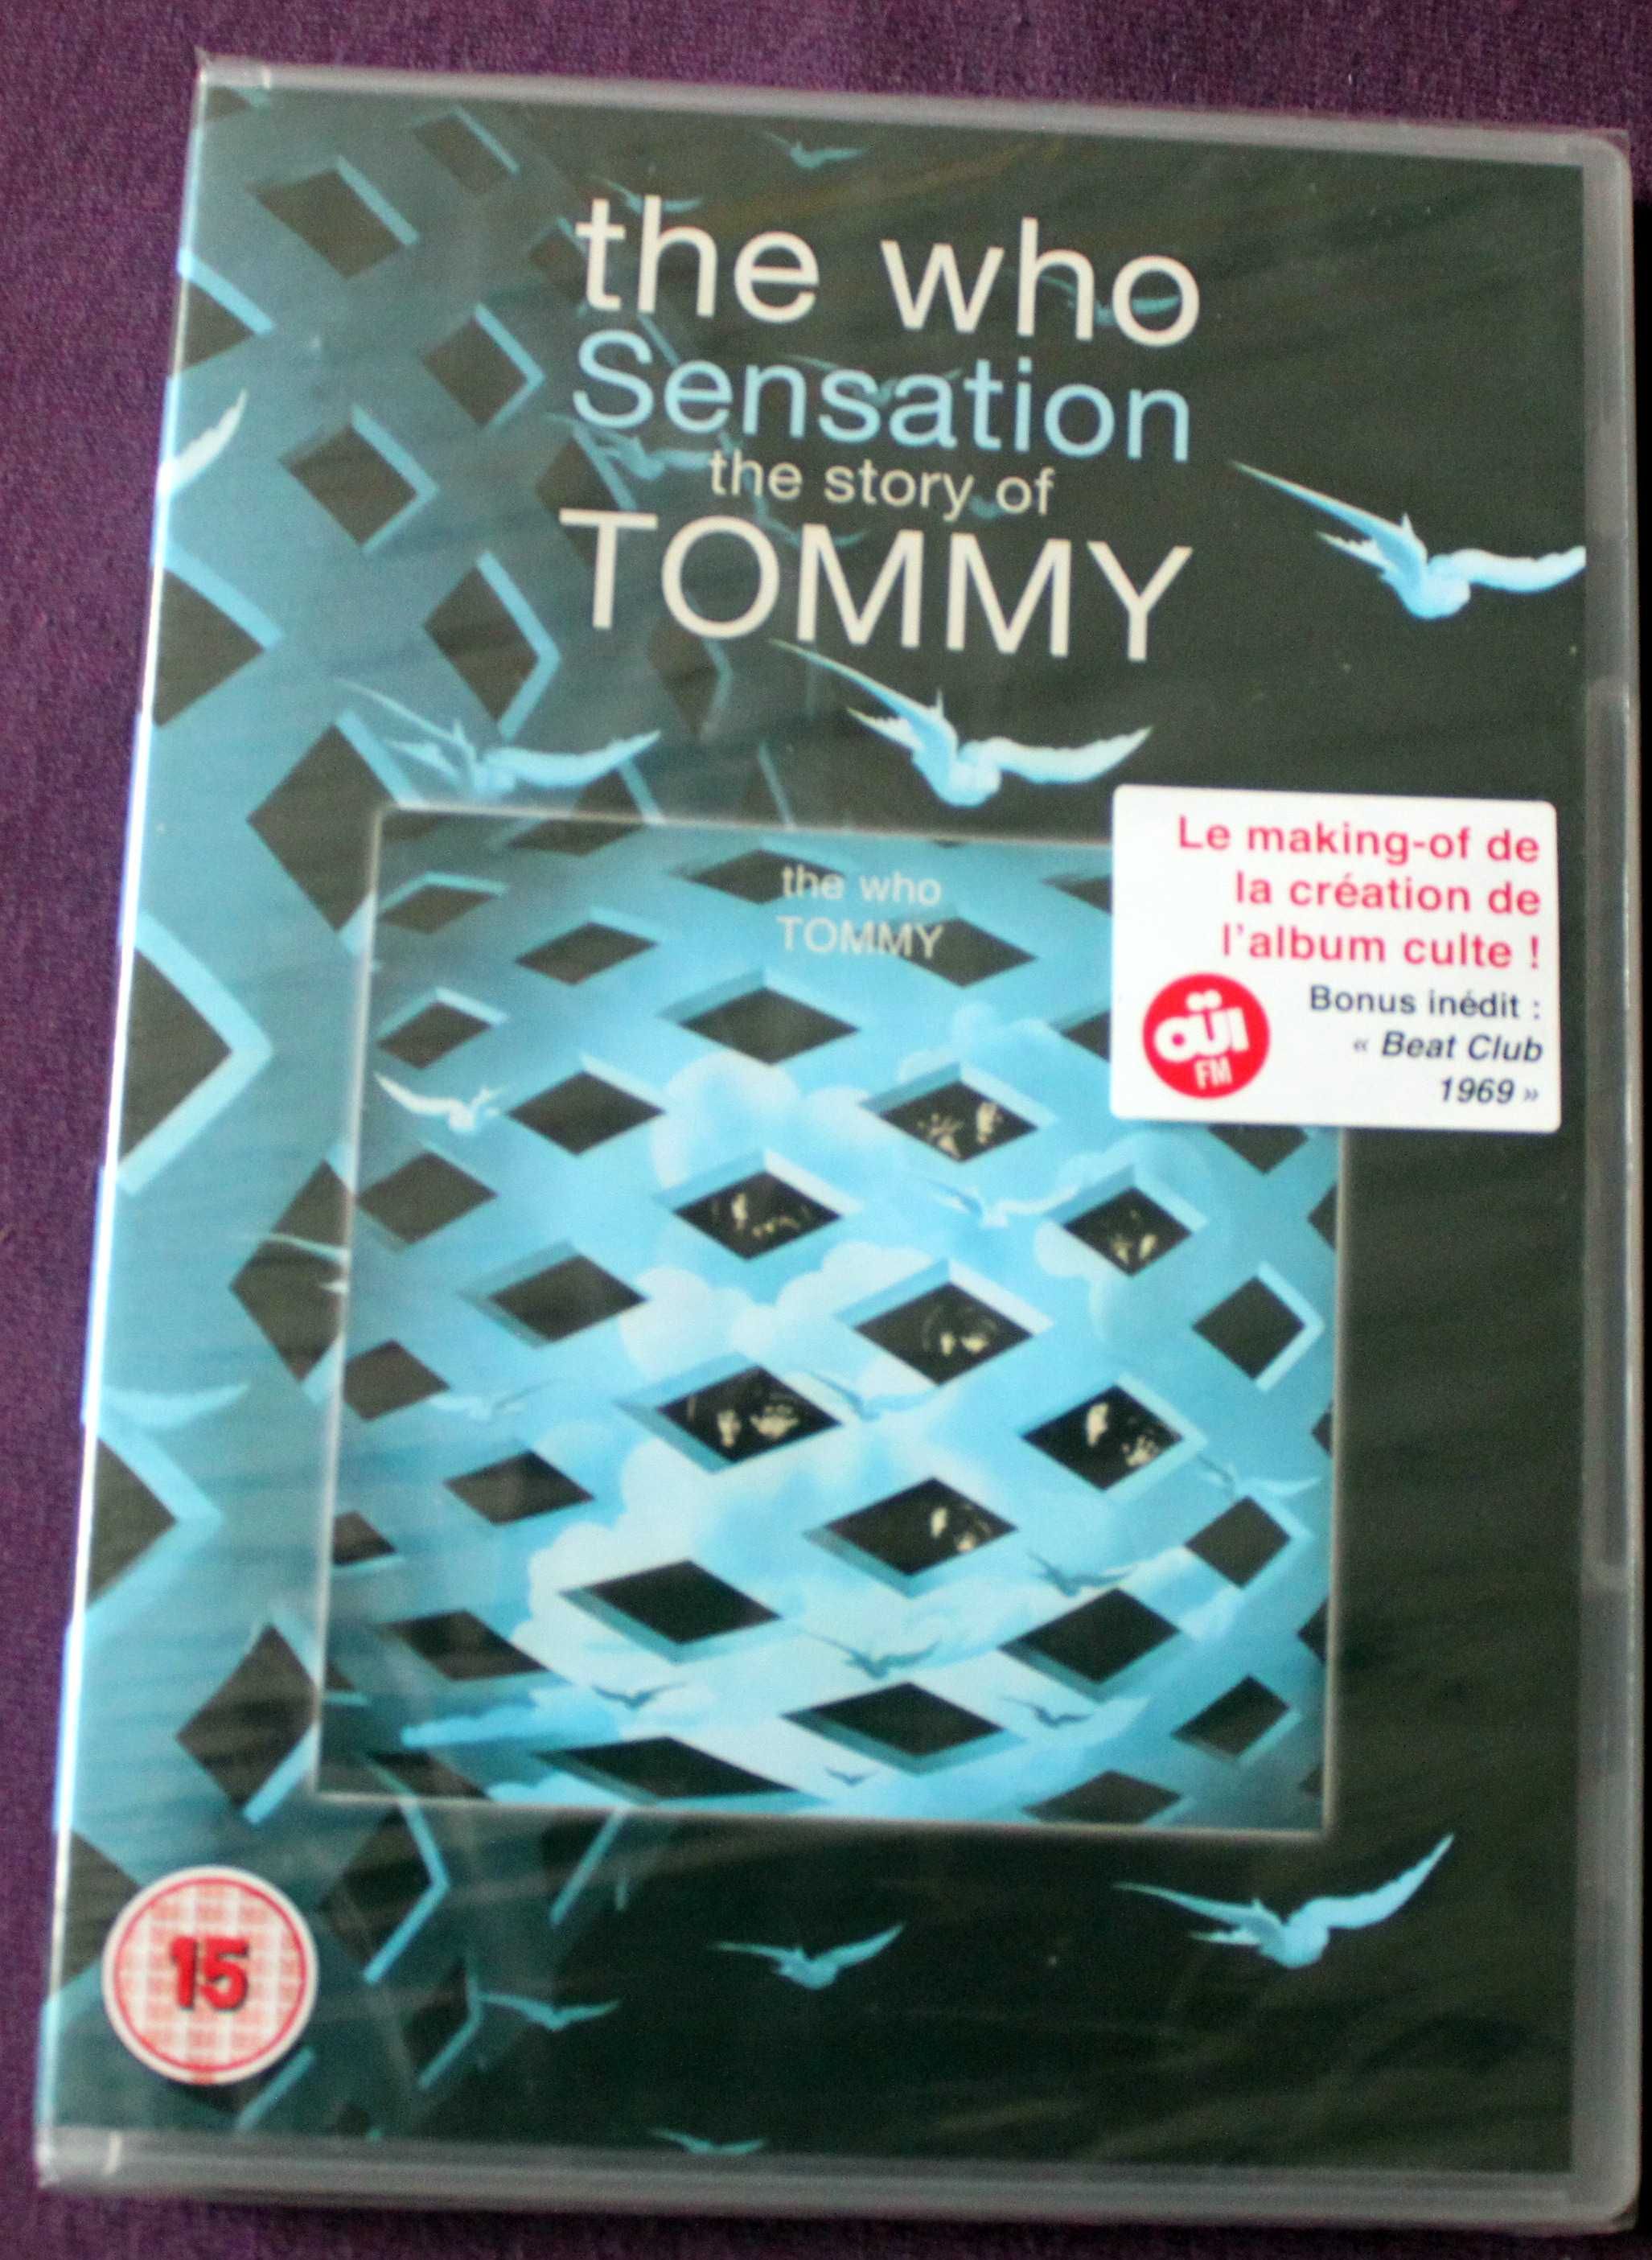 The Who - Sensation the story of Tommy DVD FOLIA